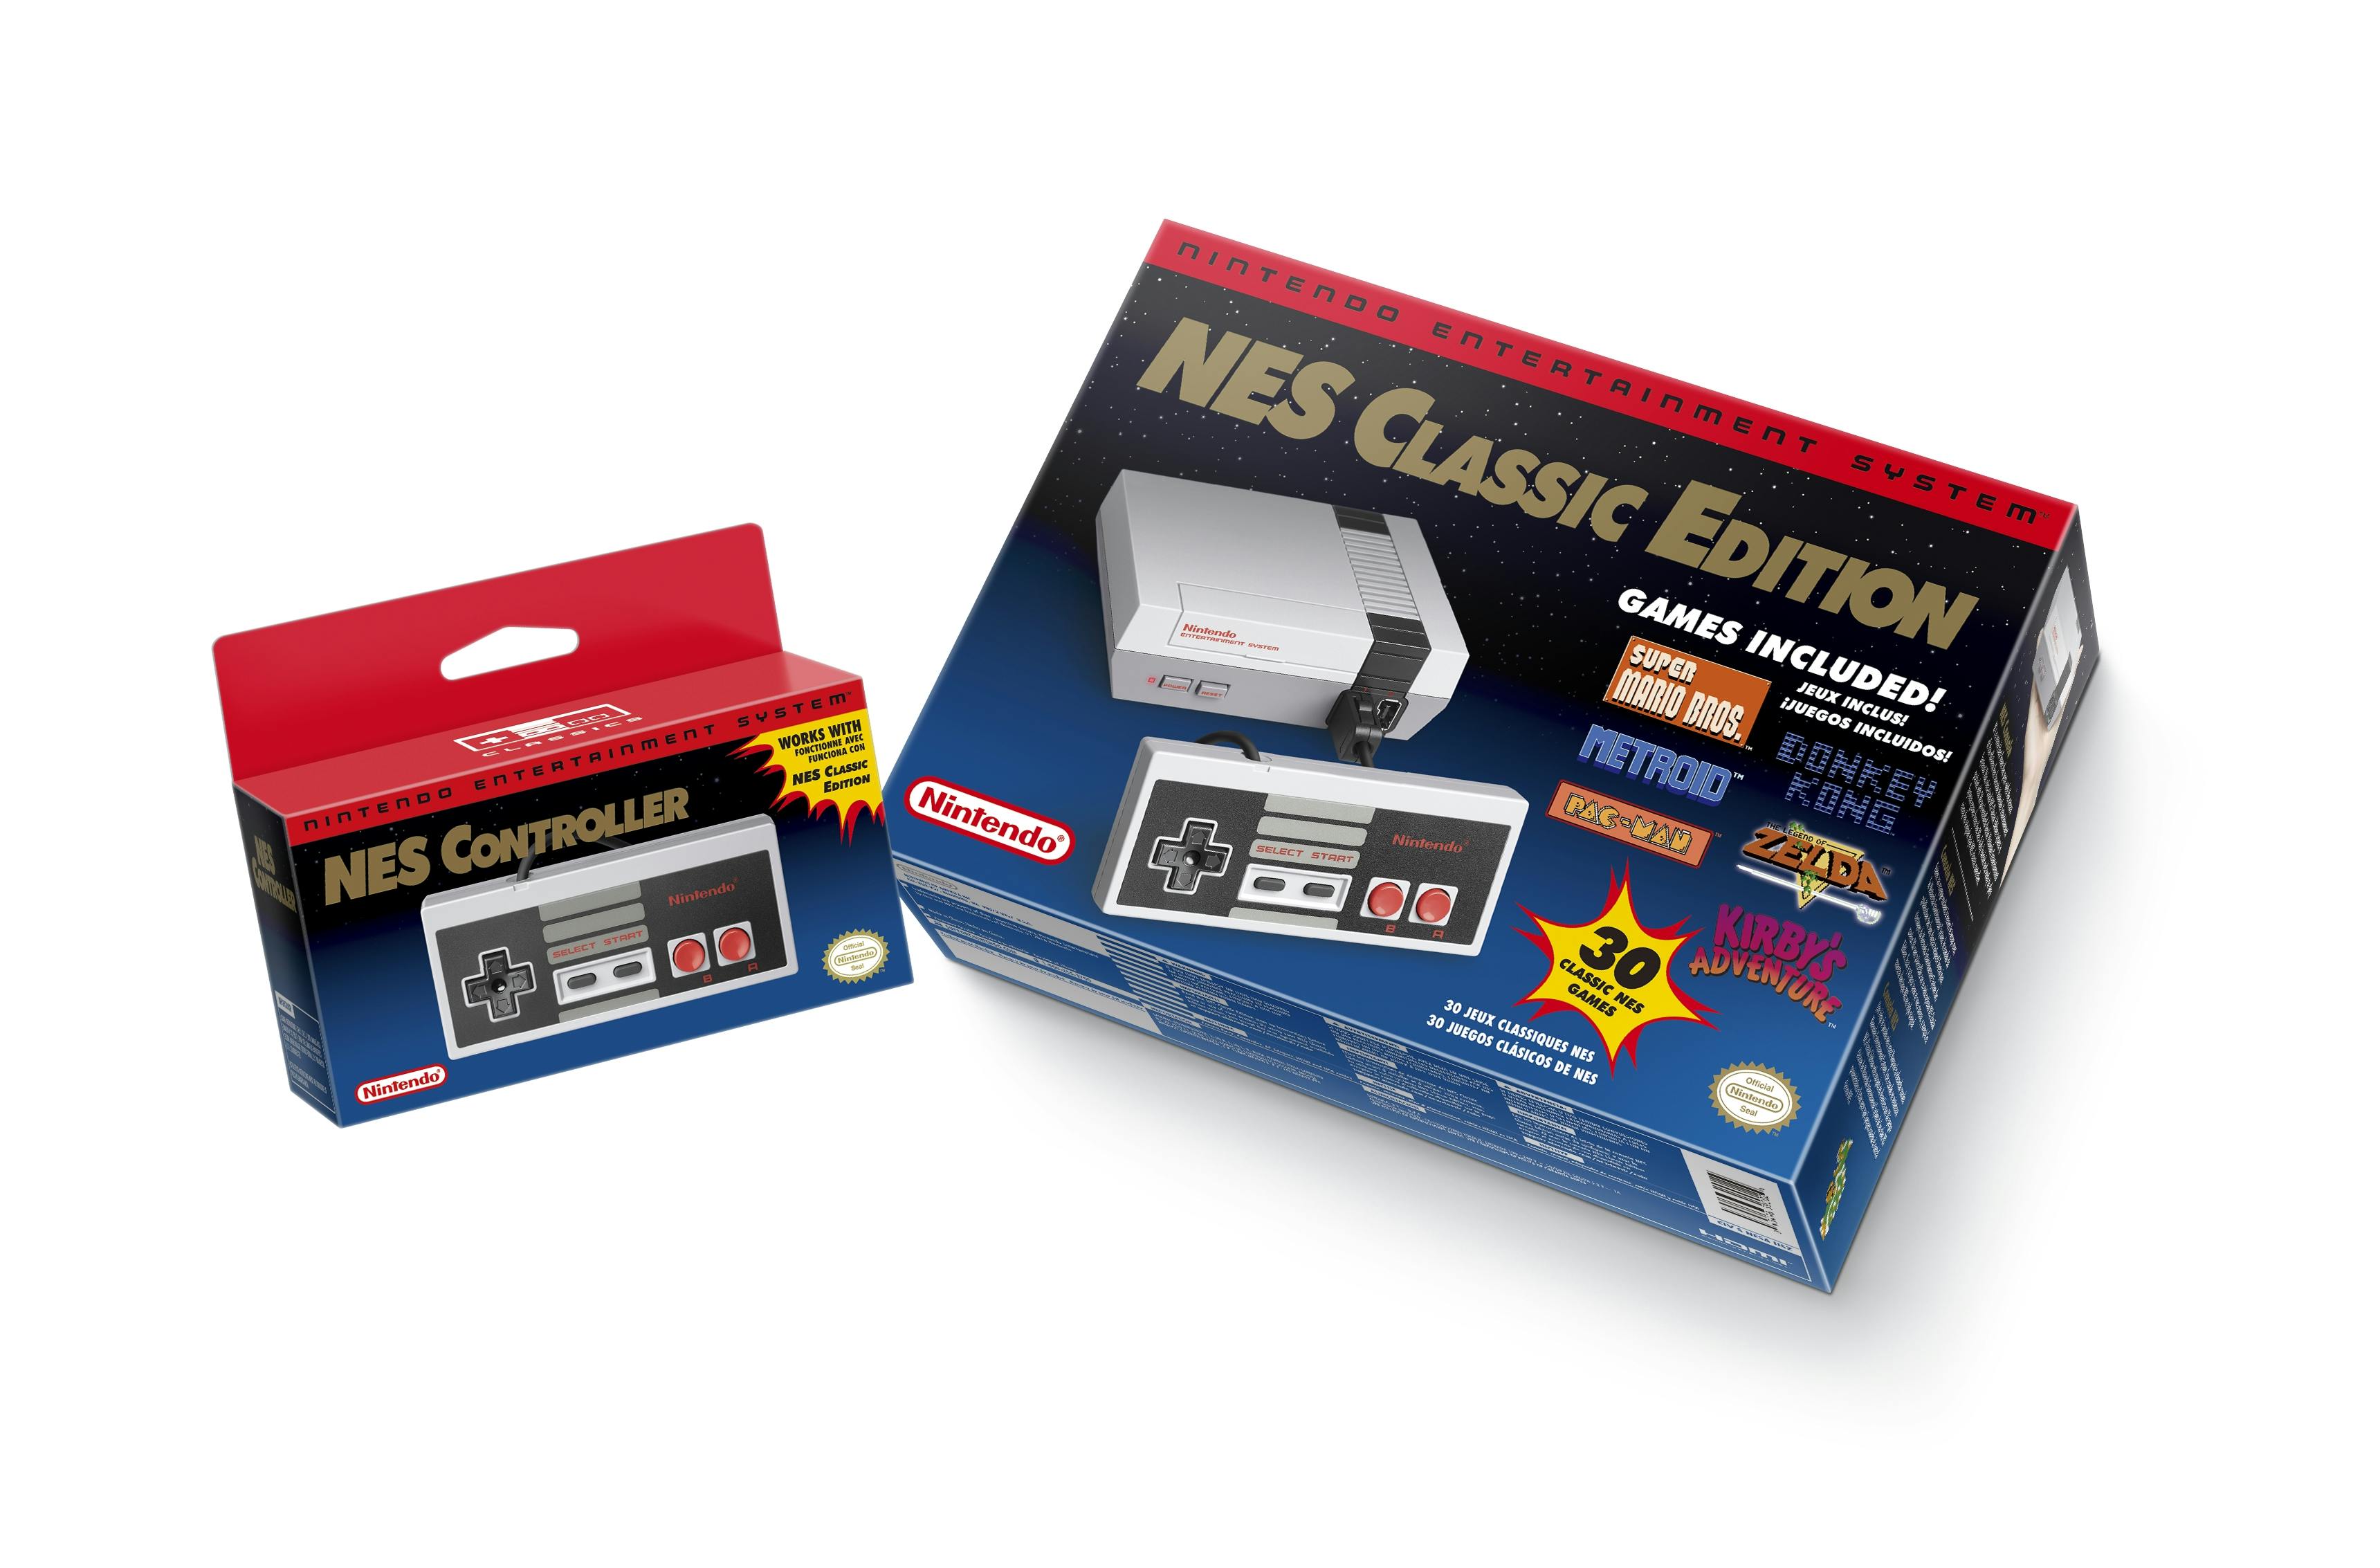 How to buy the Nintendo NES Classic